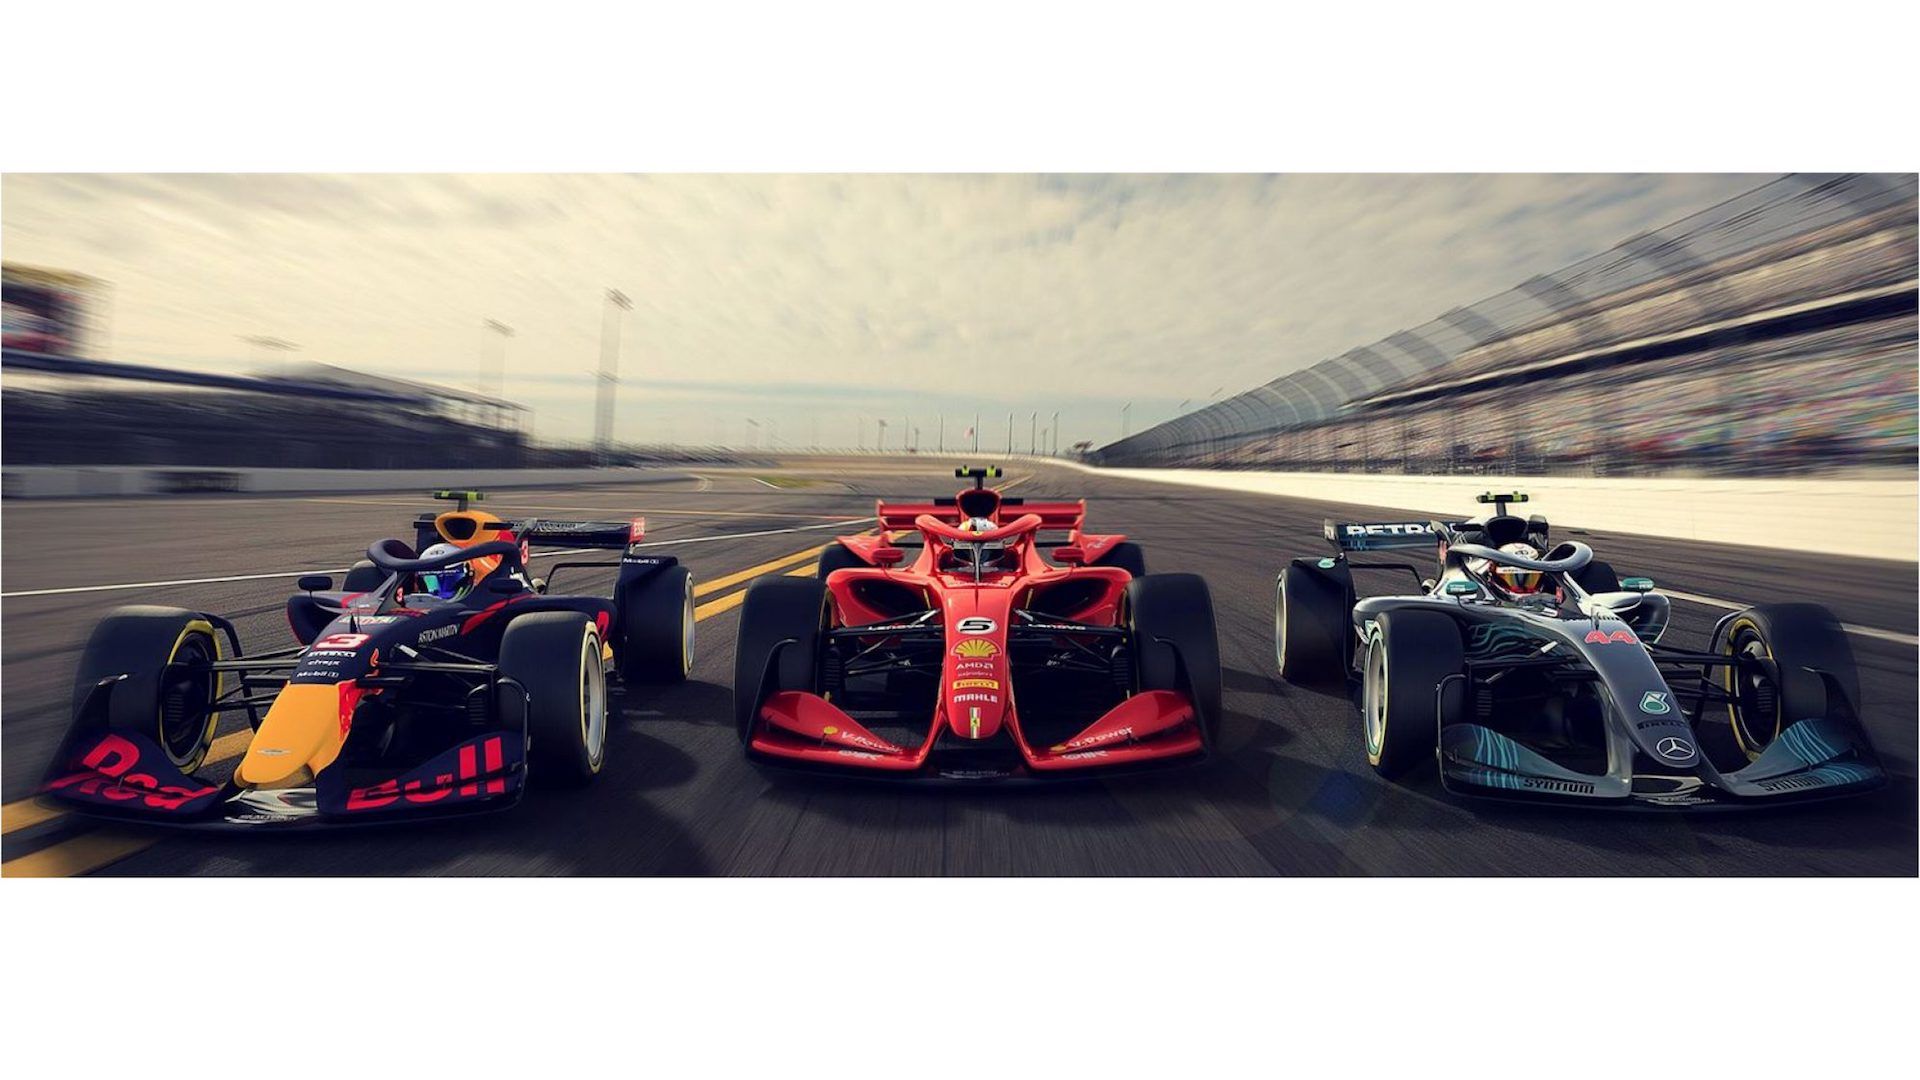 F1 car design proposals focus on aerodynamics for better racing